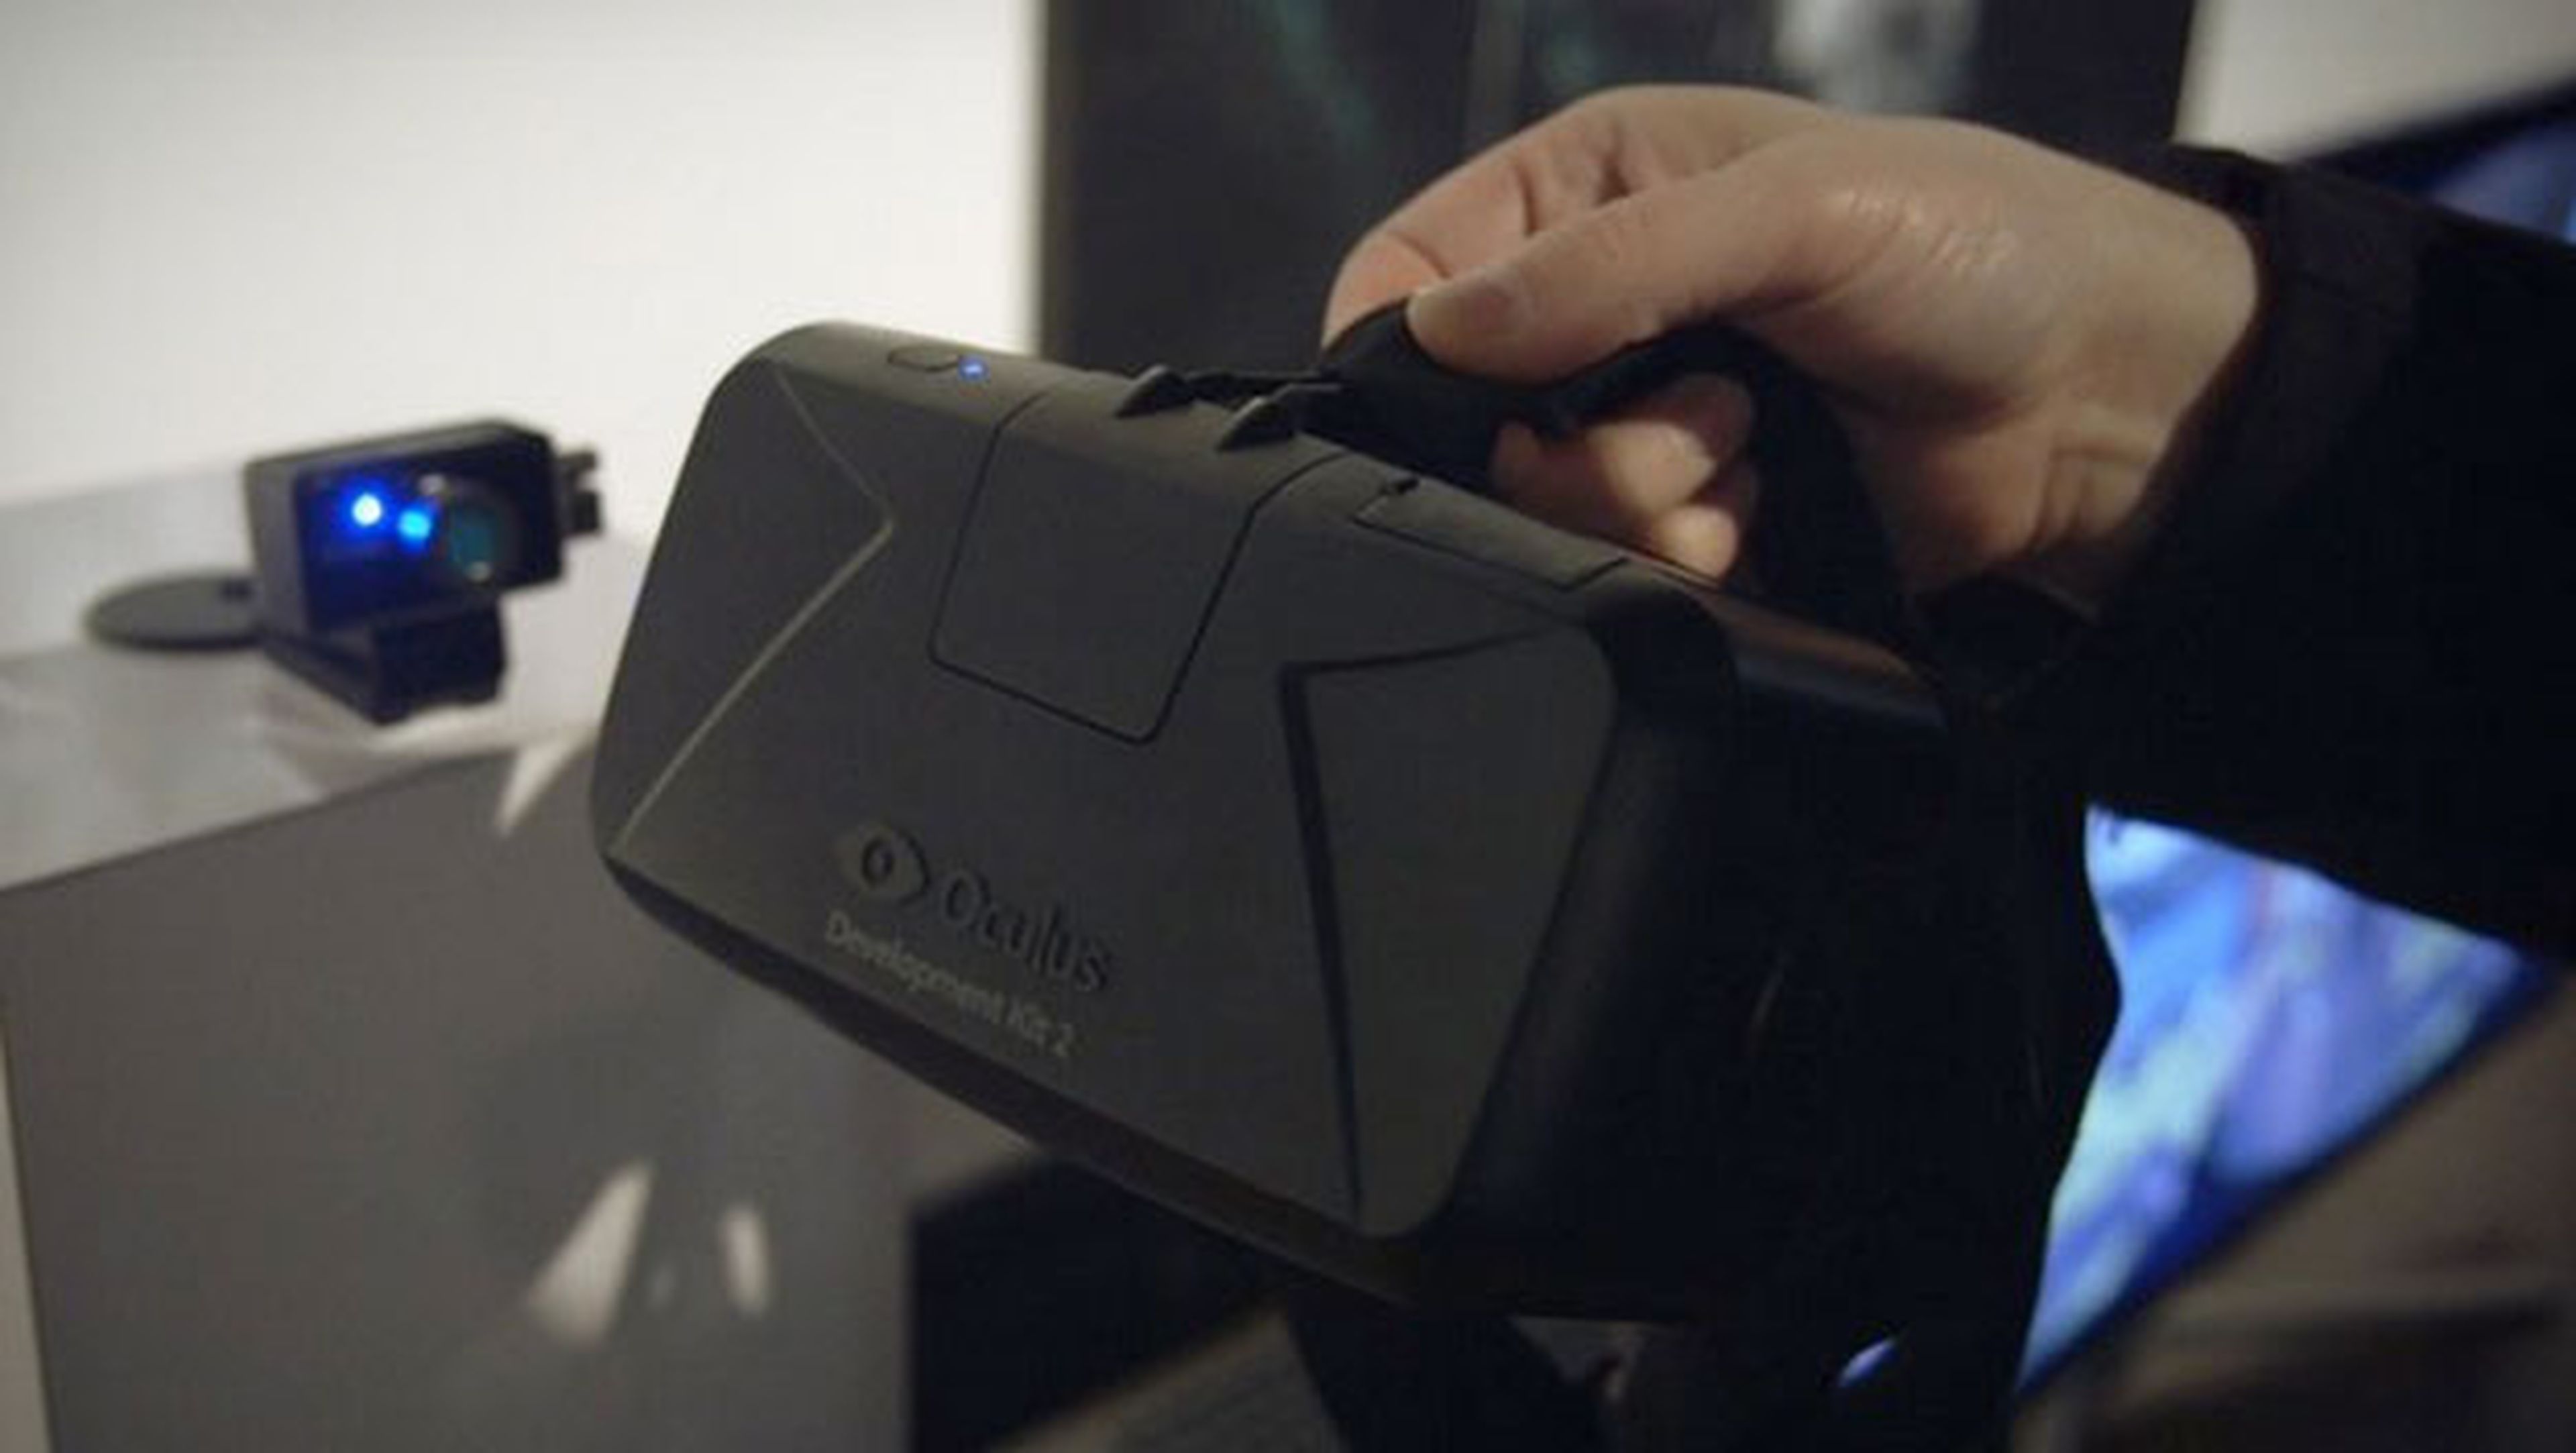 Oculus lanza Oculus Rift DK2 para desarrolladores por 350$